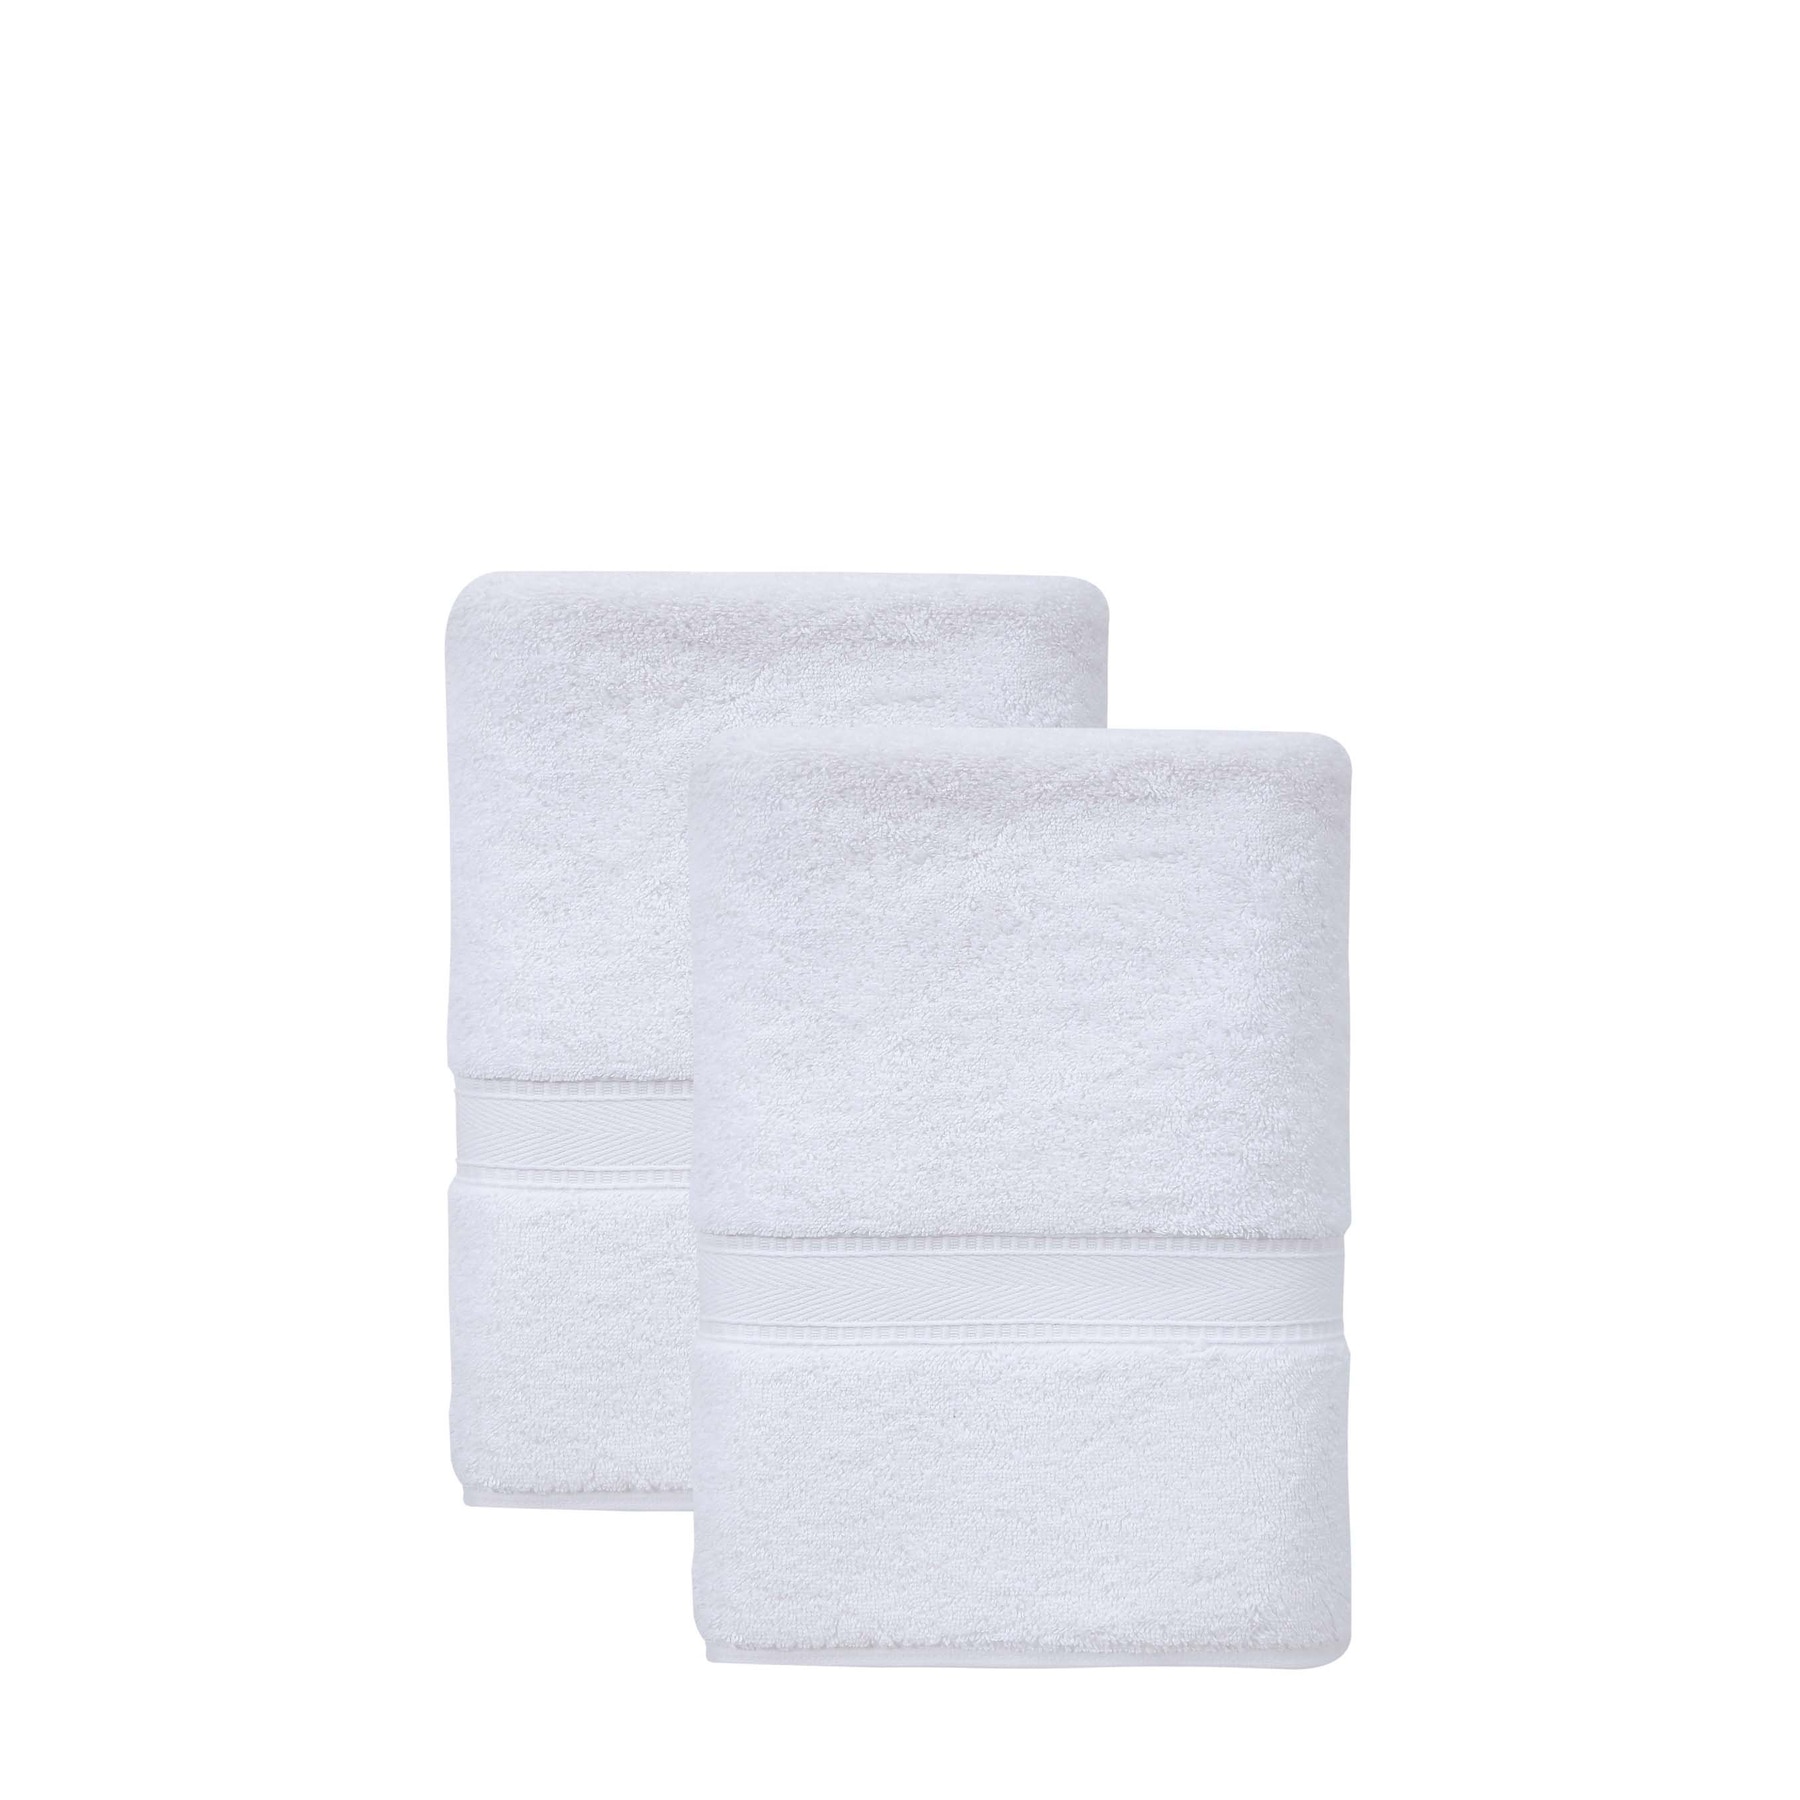 Ozan Premium Home 100% Turkish Cotton Maui Collection Luxury Bath Towels ( Set of 2) - On Sale - Bed Bath & Beyond - 32966257